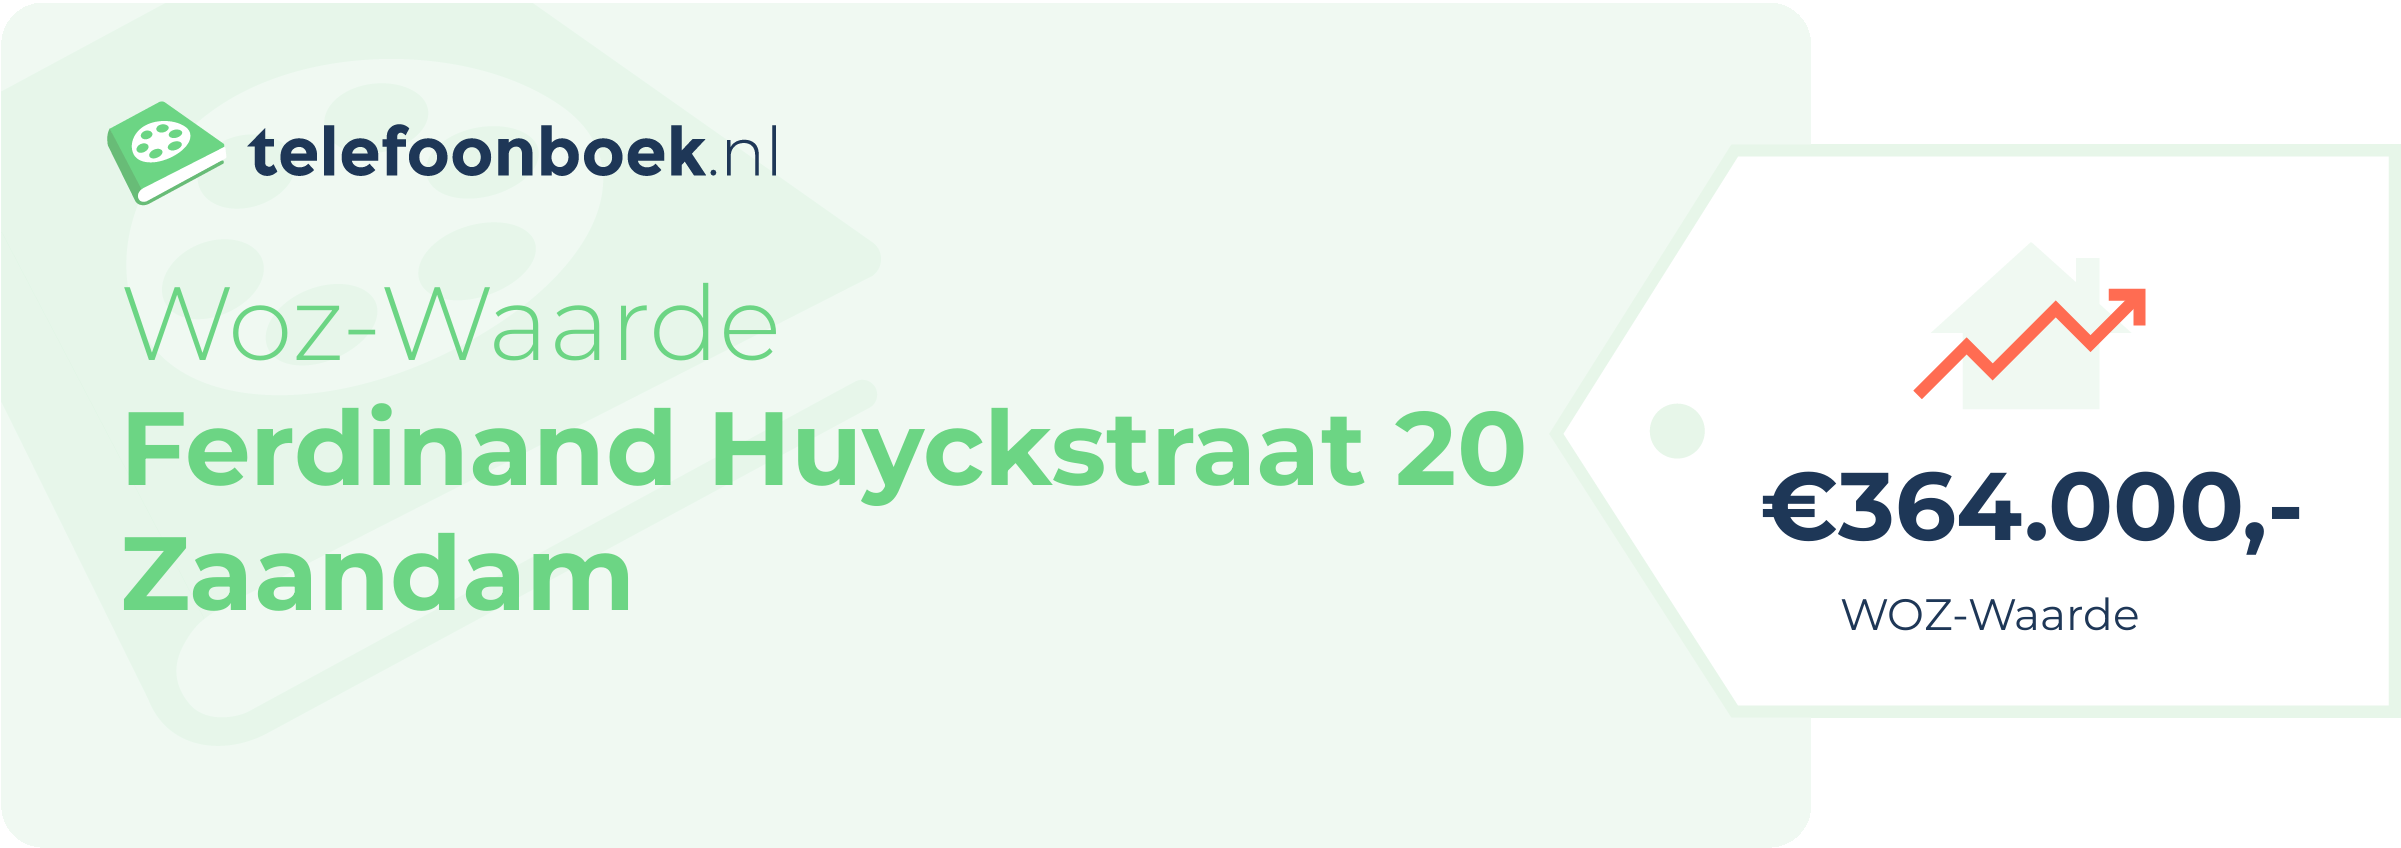 WOZ-waarde Ferdinand Huyckstraat 20 Zaandam